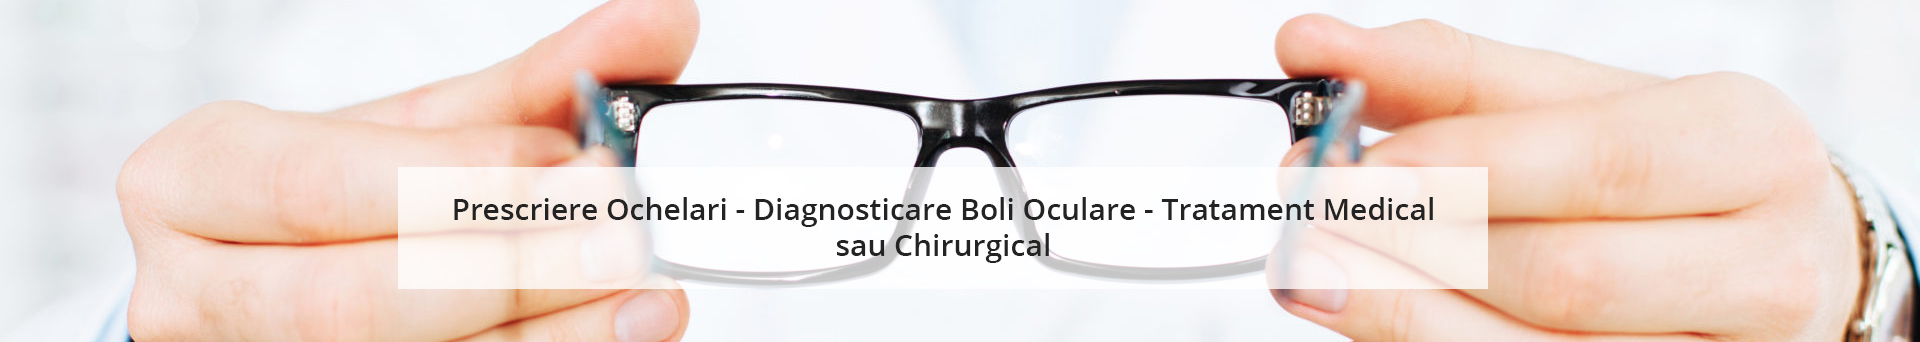 Prescriere Ochelari - Diagnosticare Boli Oculare - Tratament Medical sau Chirurgical